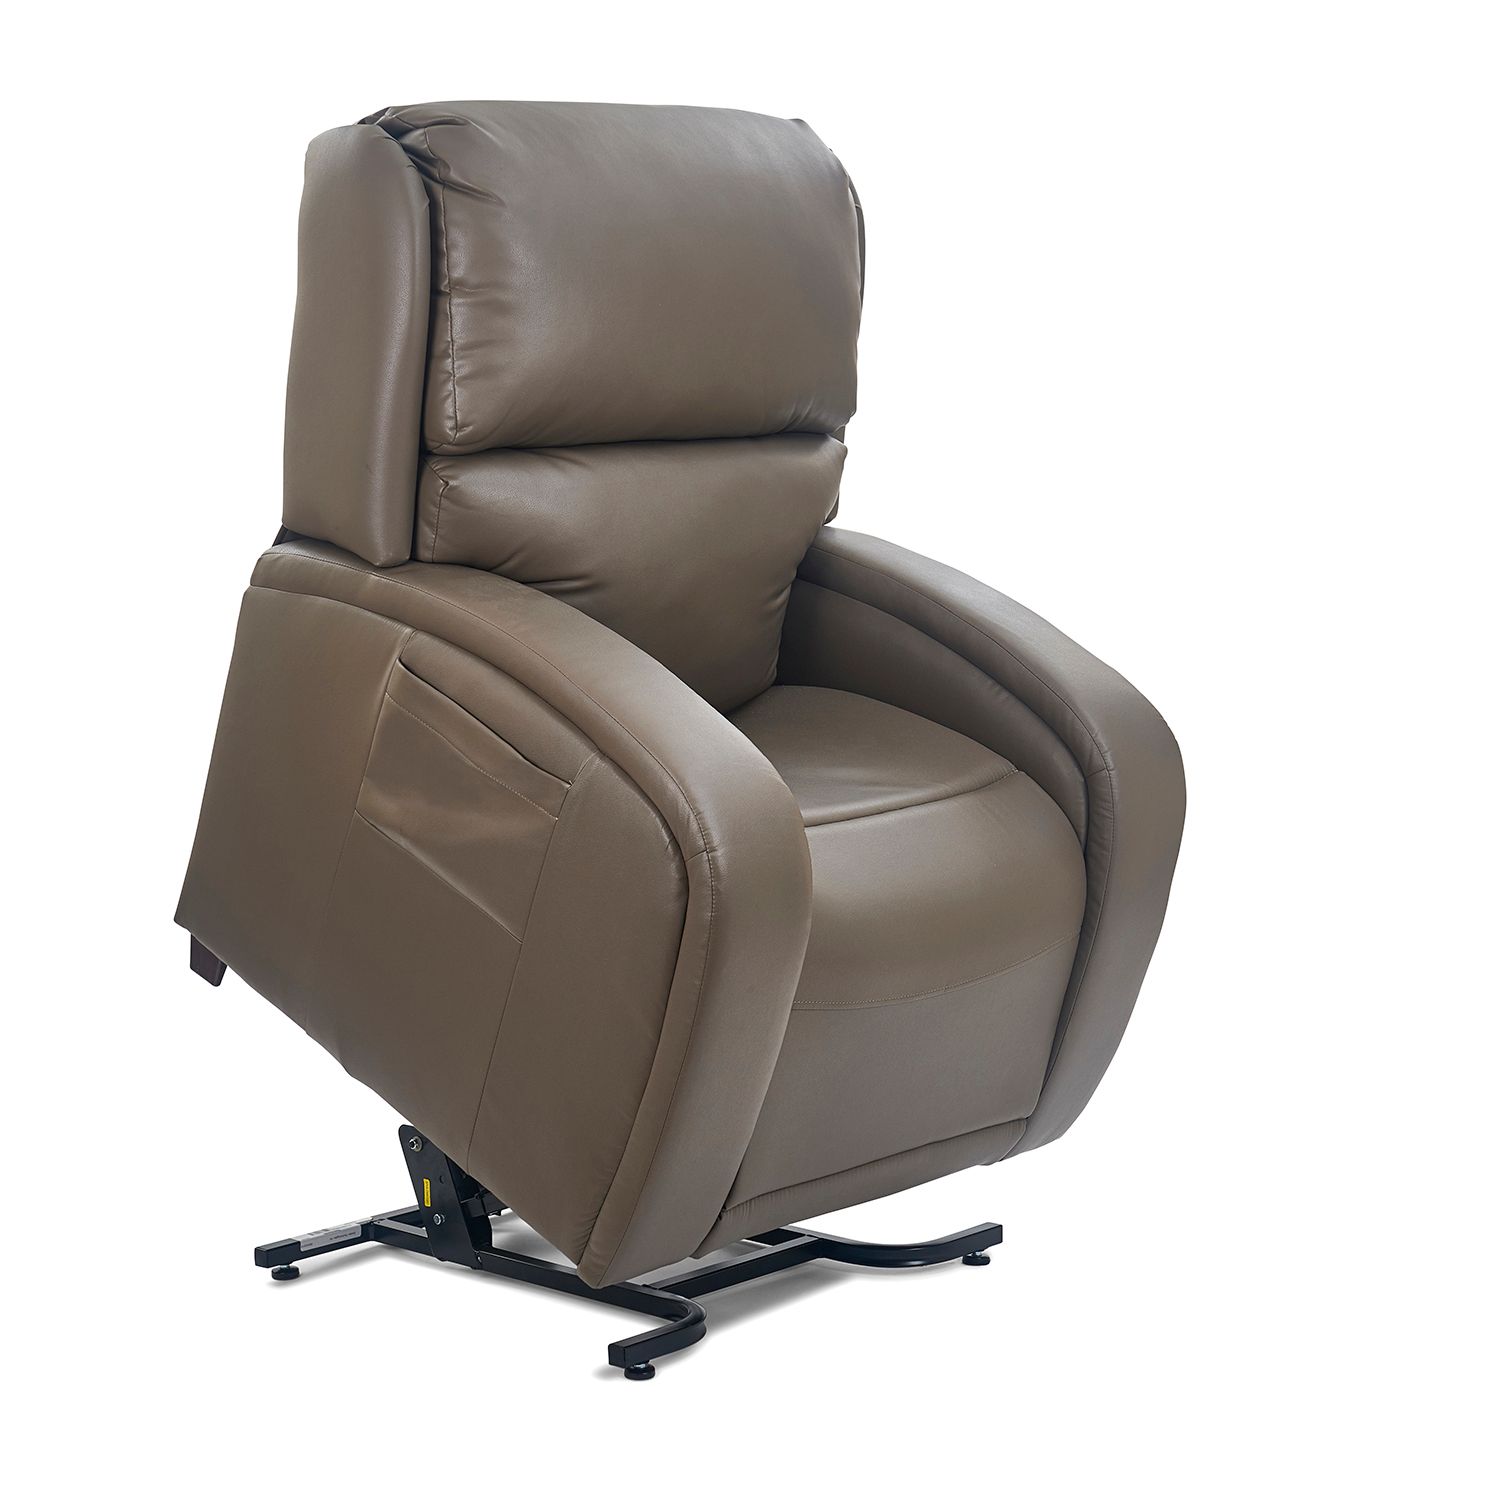 San Bernardino buy sell used golden tech liftchair recliner are the relaxer cloud twilight viva maxi-comfort